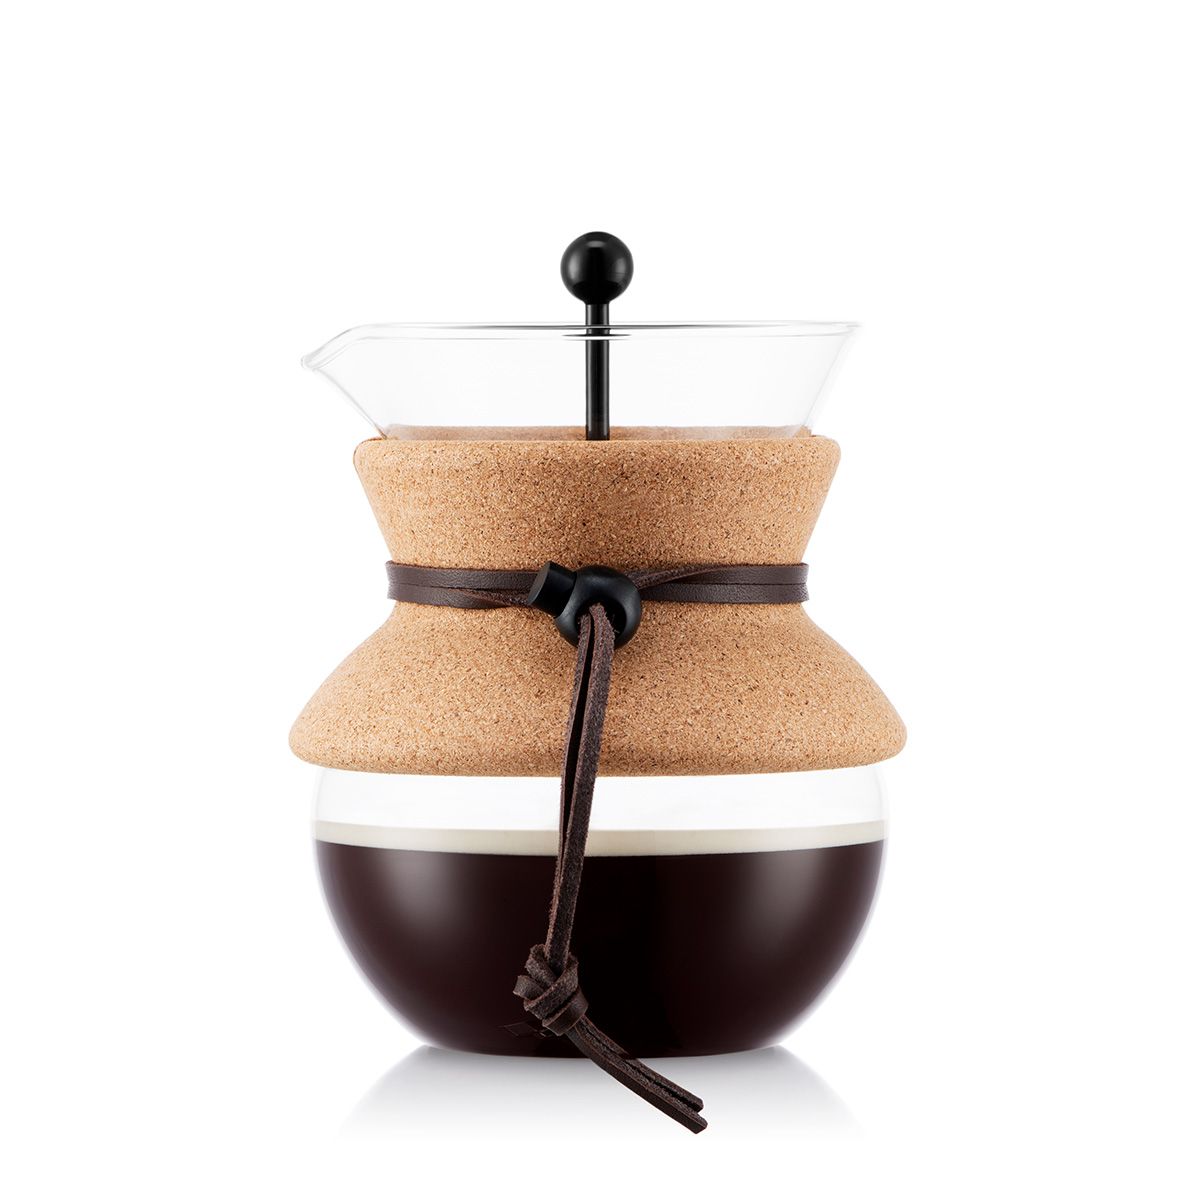 Bodum hælder over kaffemaskine med permanent kaffefilter kork, 4 kopper